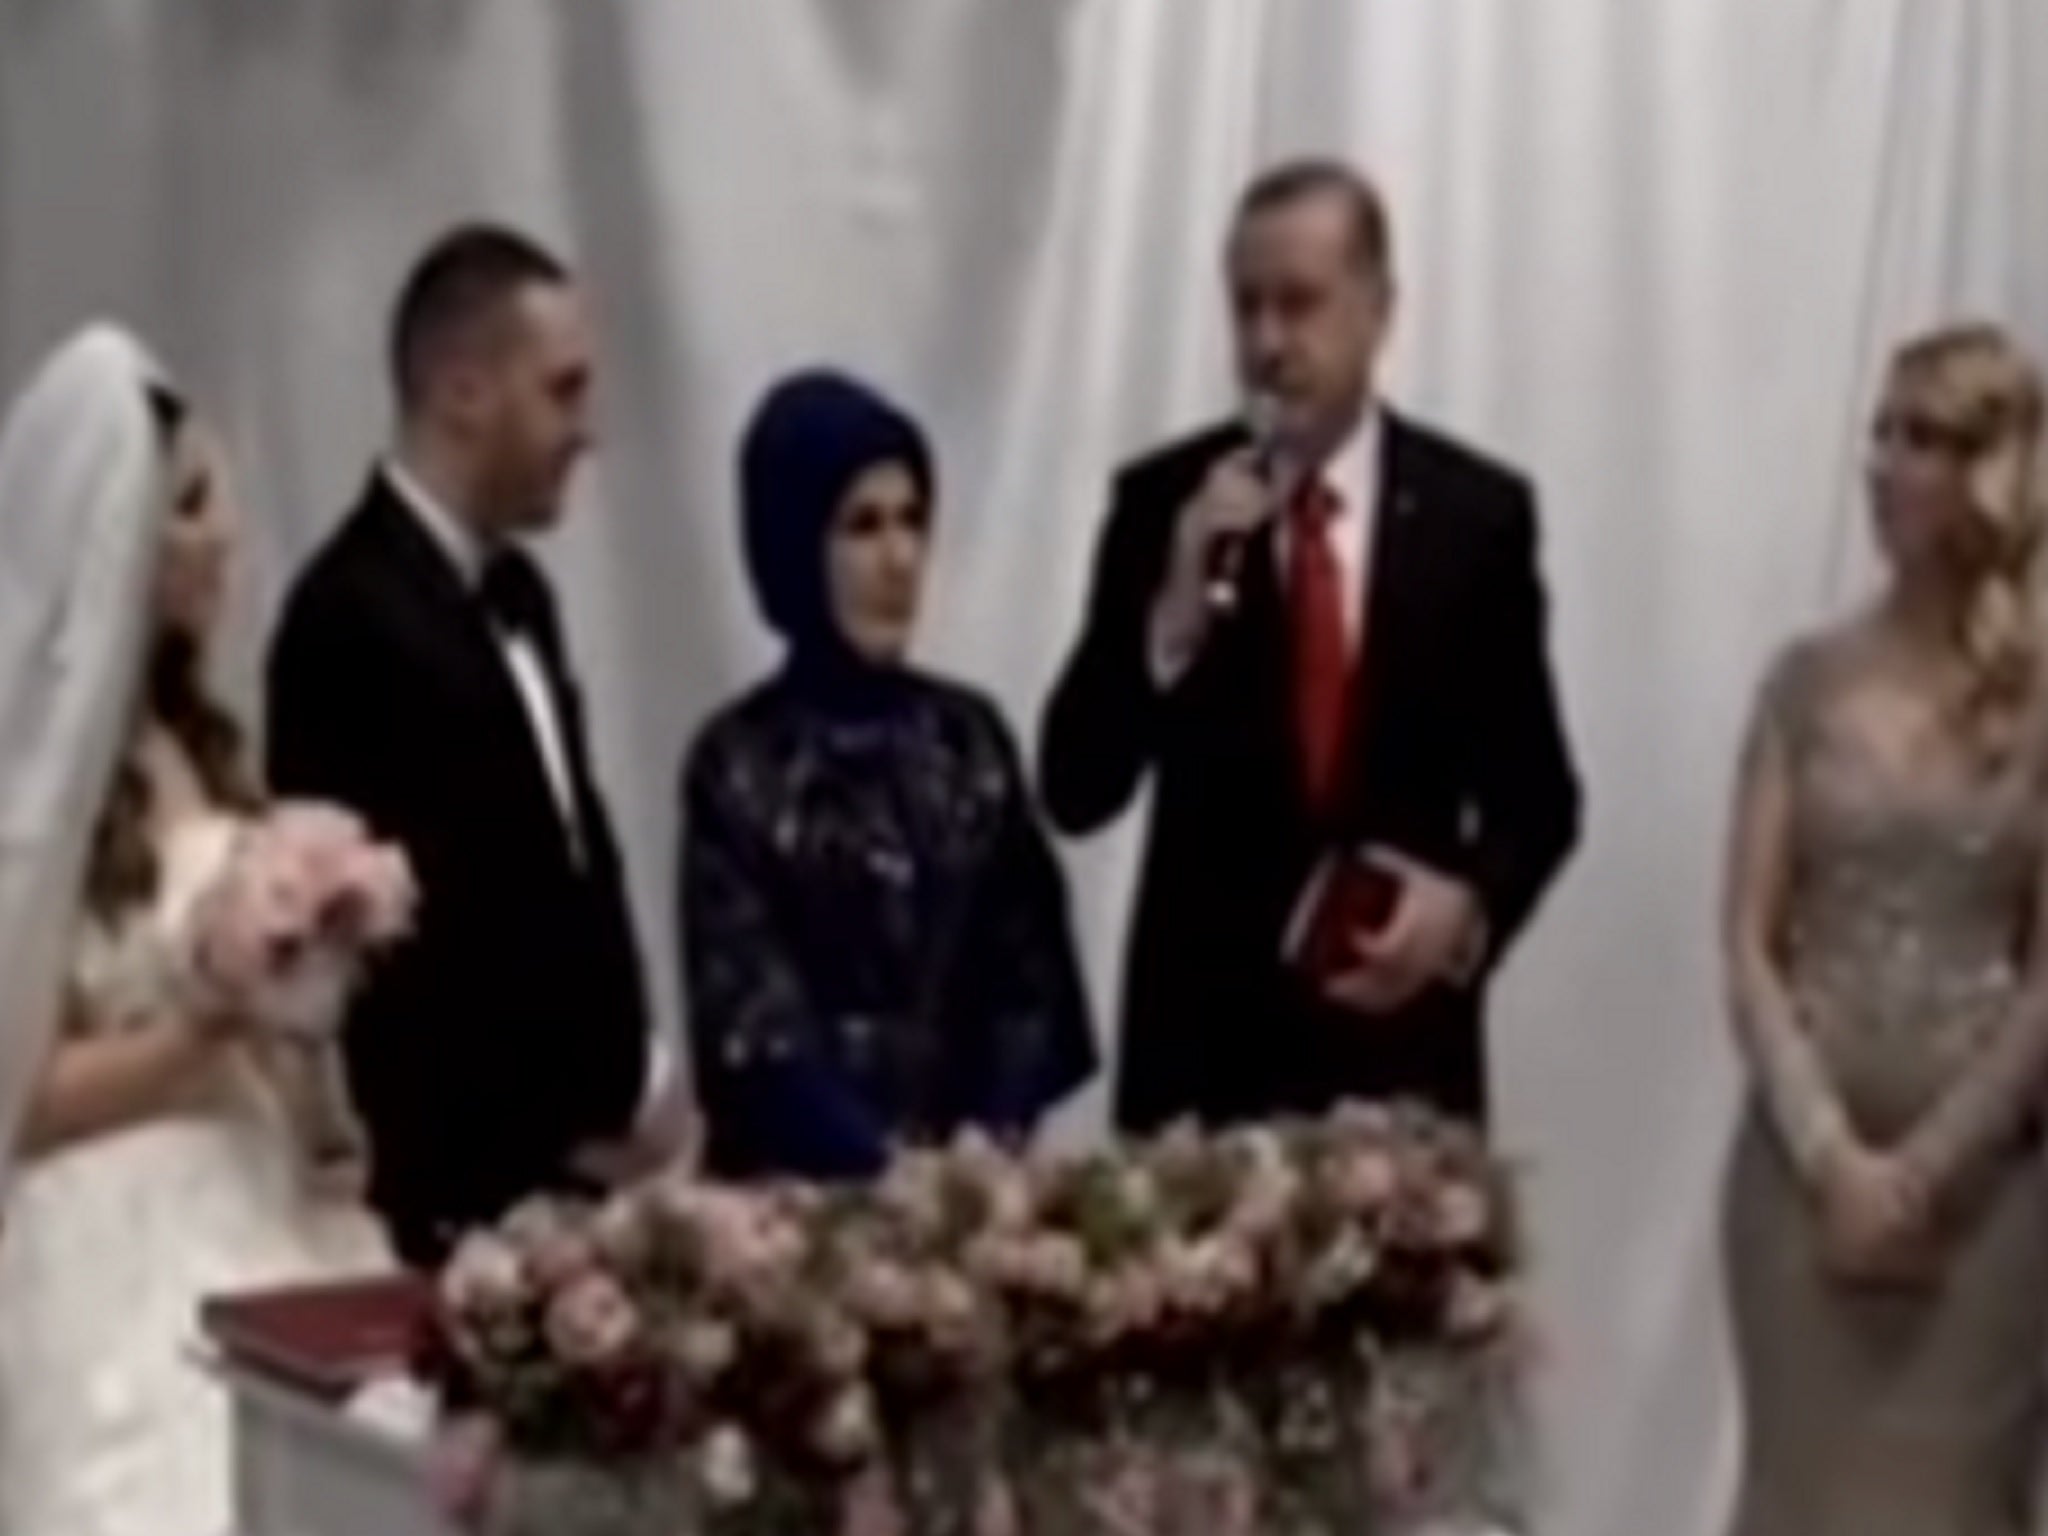 Turkish President Tayyip Erdogan has described birth control as a form of 'treason' at a couple's wedding